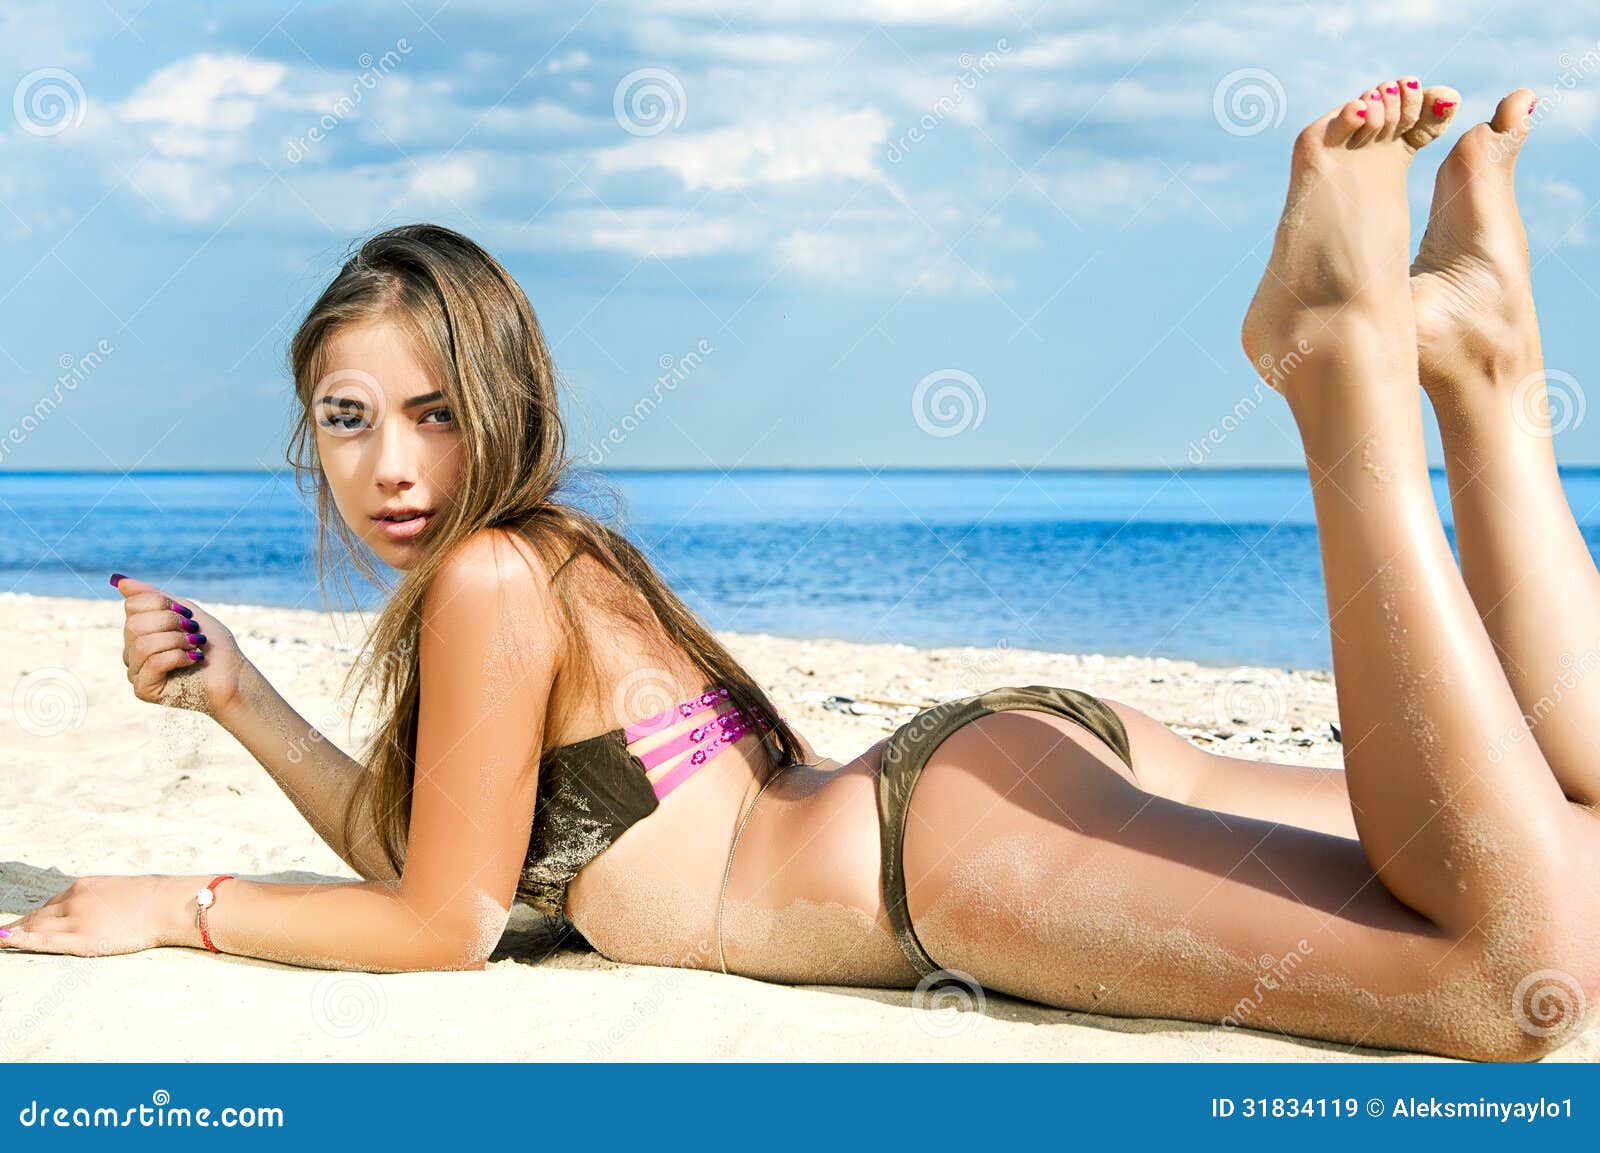 Lying beach woman on 